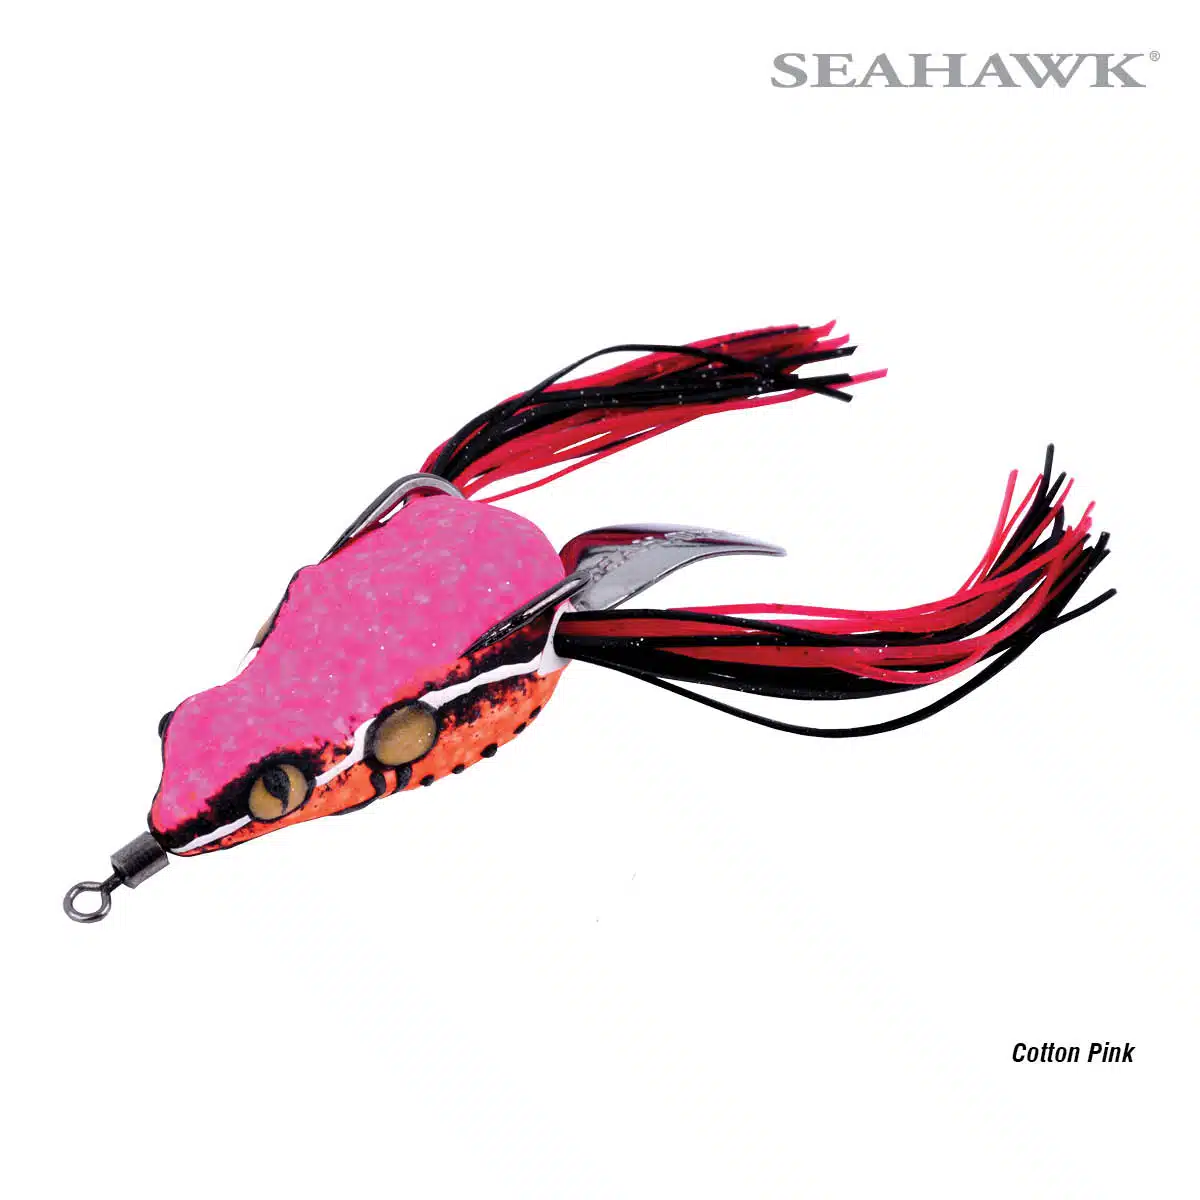 Seahawk Arrow Frog 40 Cotton Pink